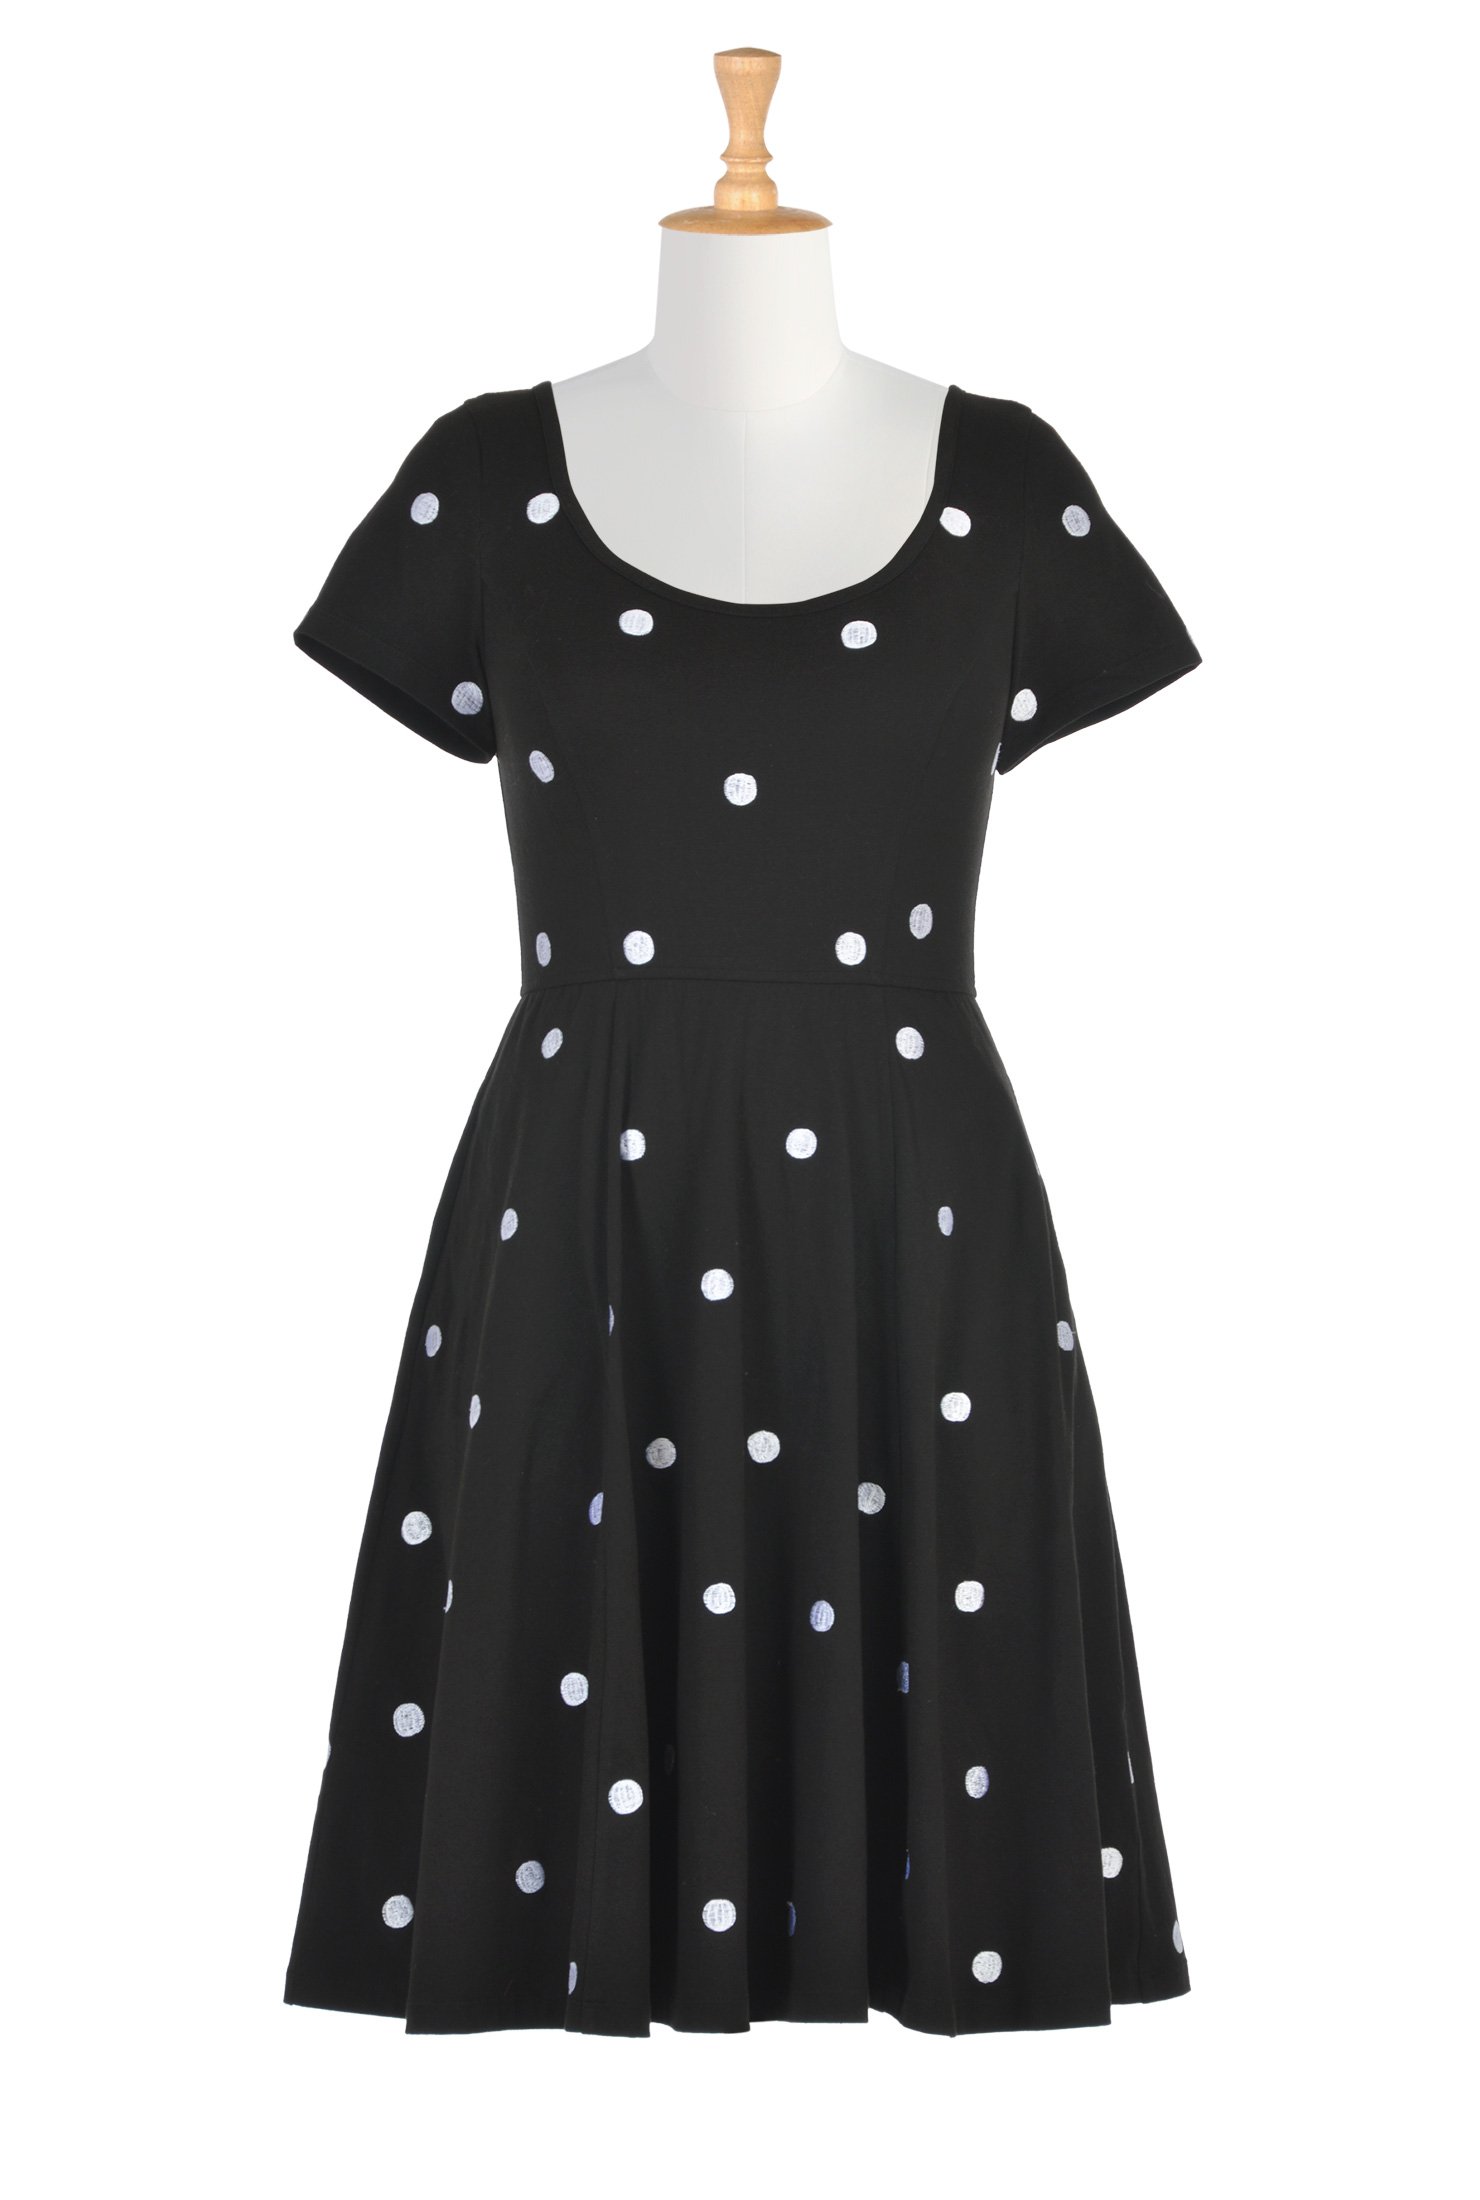 Shop Polka dot embellished cotton knit dress | eShakti